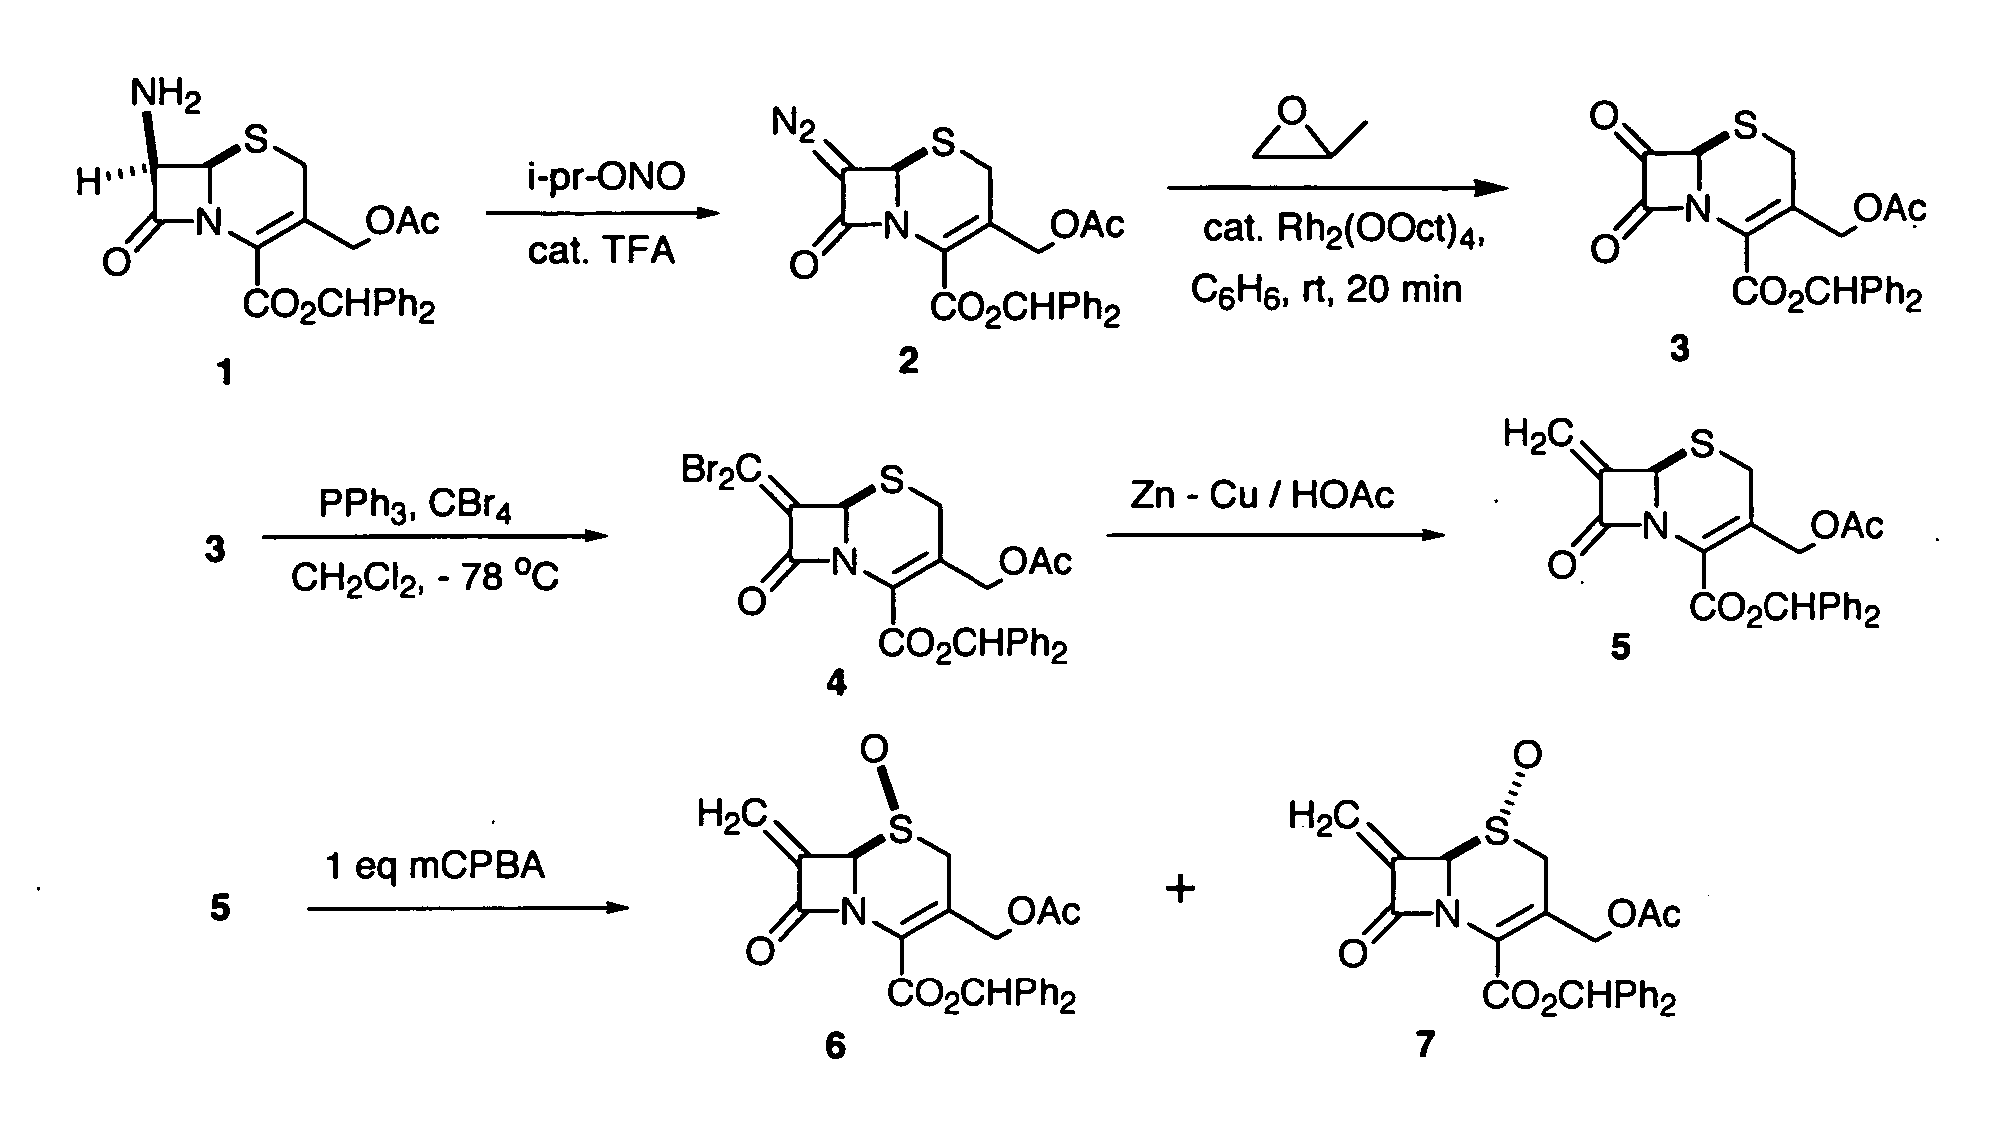 Chphalosporin-derived mercaptans as inhibitors of serine and metallo-beta-lactamases